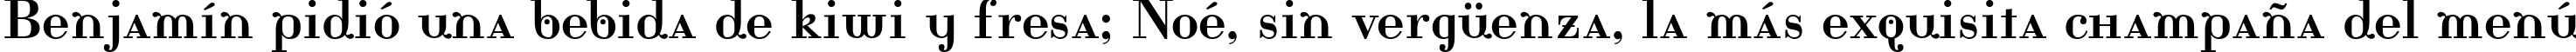 Пример написания шрифтом Rina текста на испанском